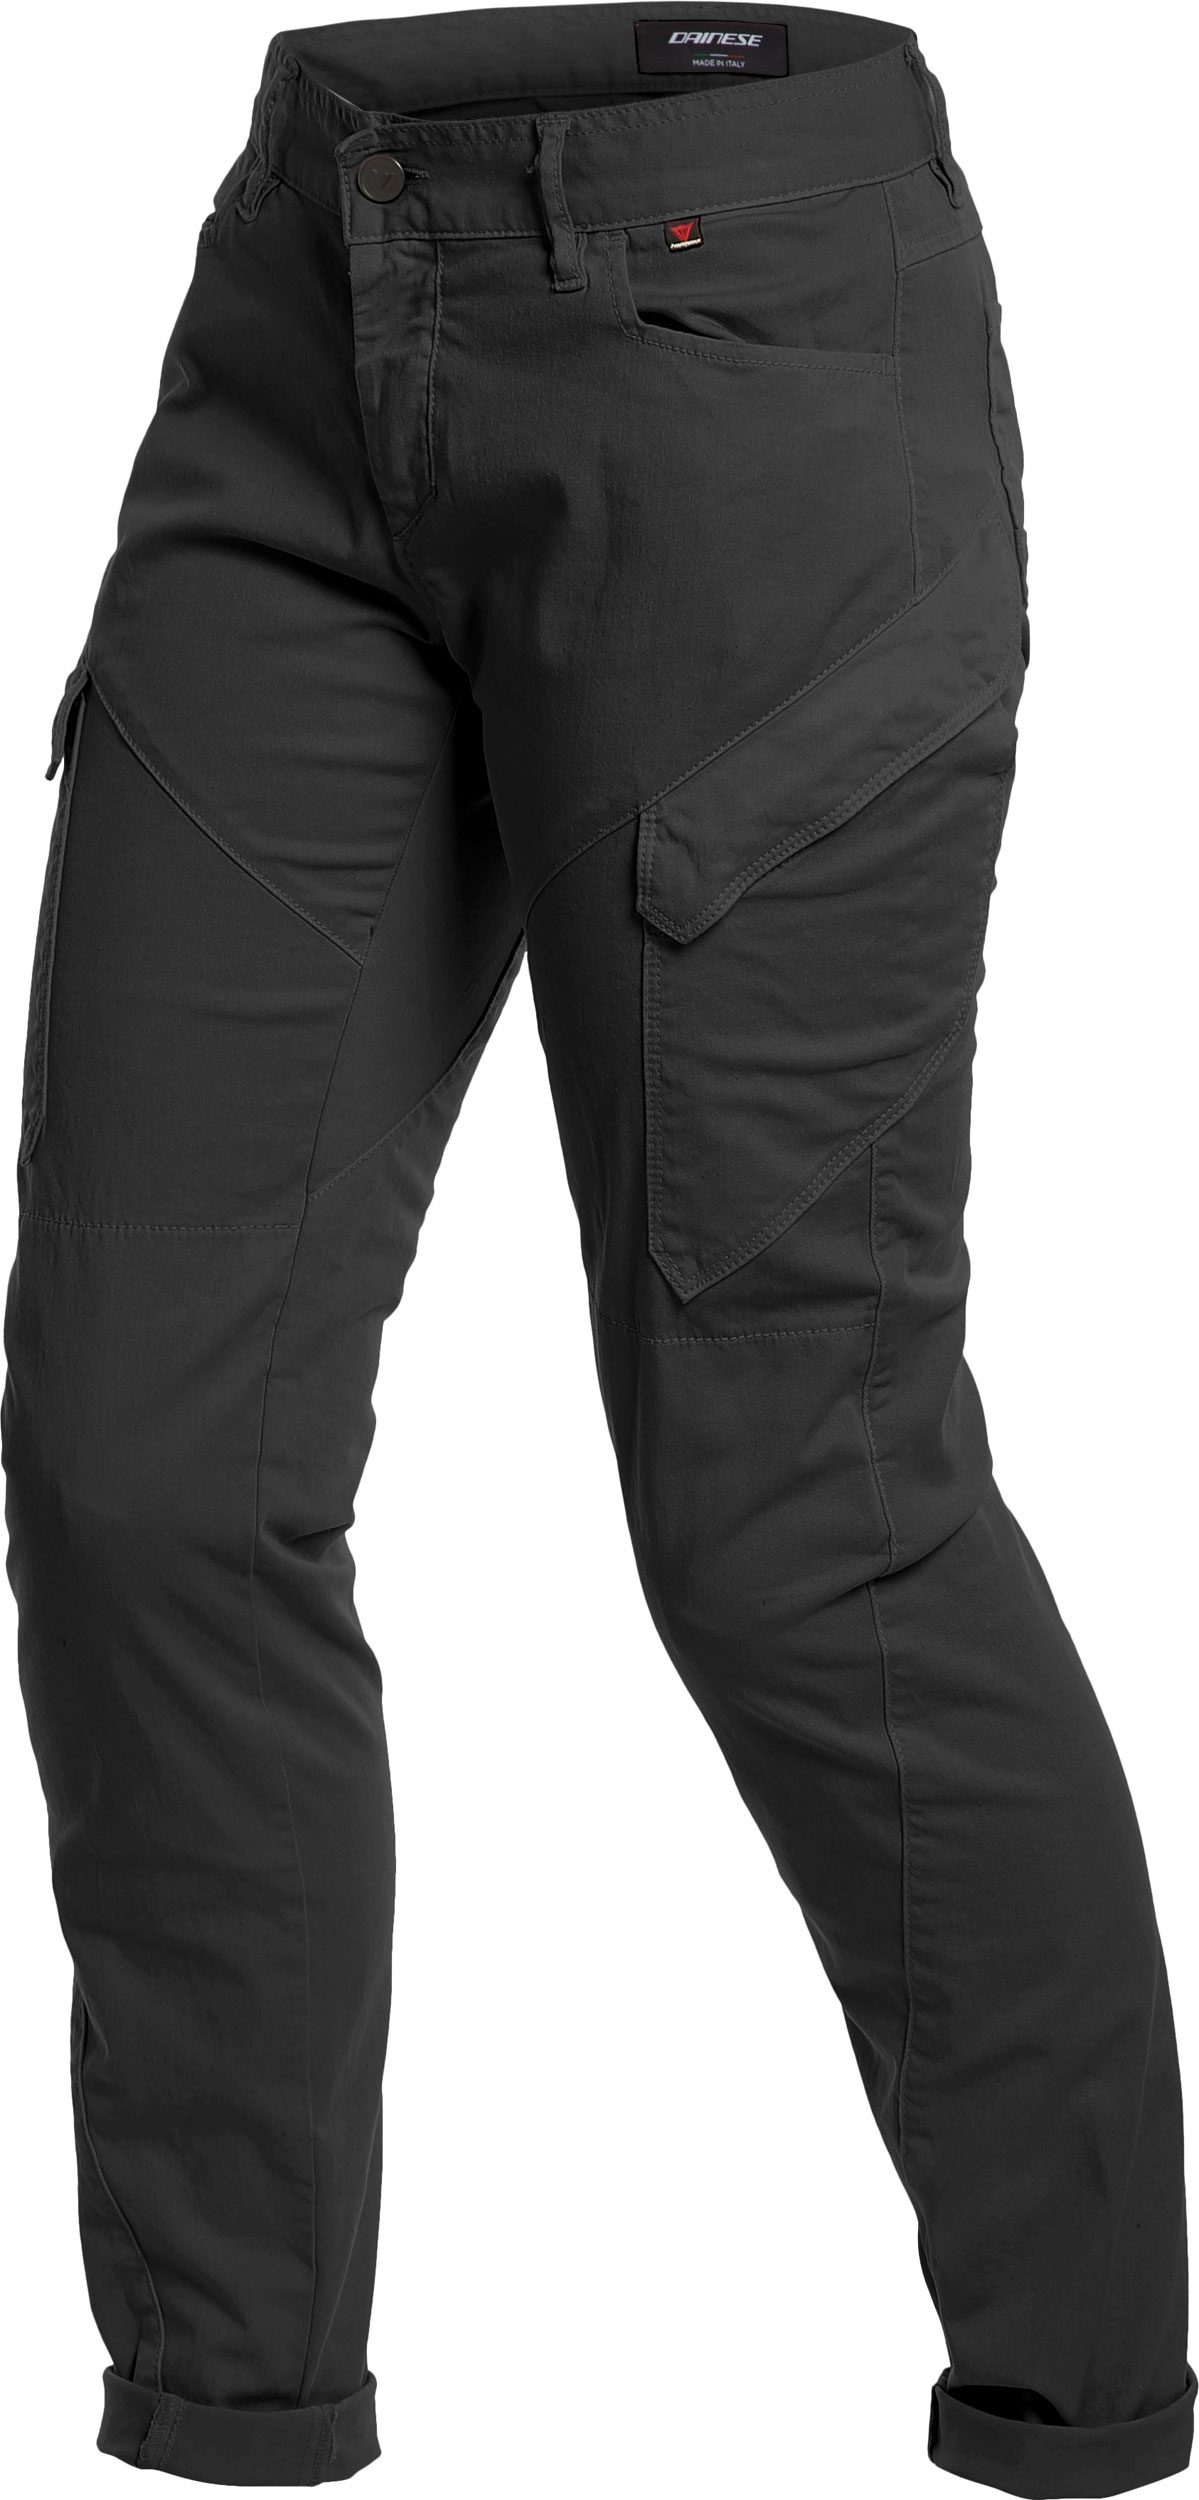 Dainese Kargo, Jeans/Pantalons textile - Noir - 34